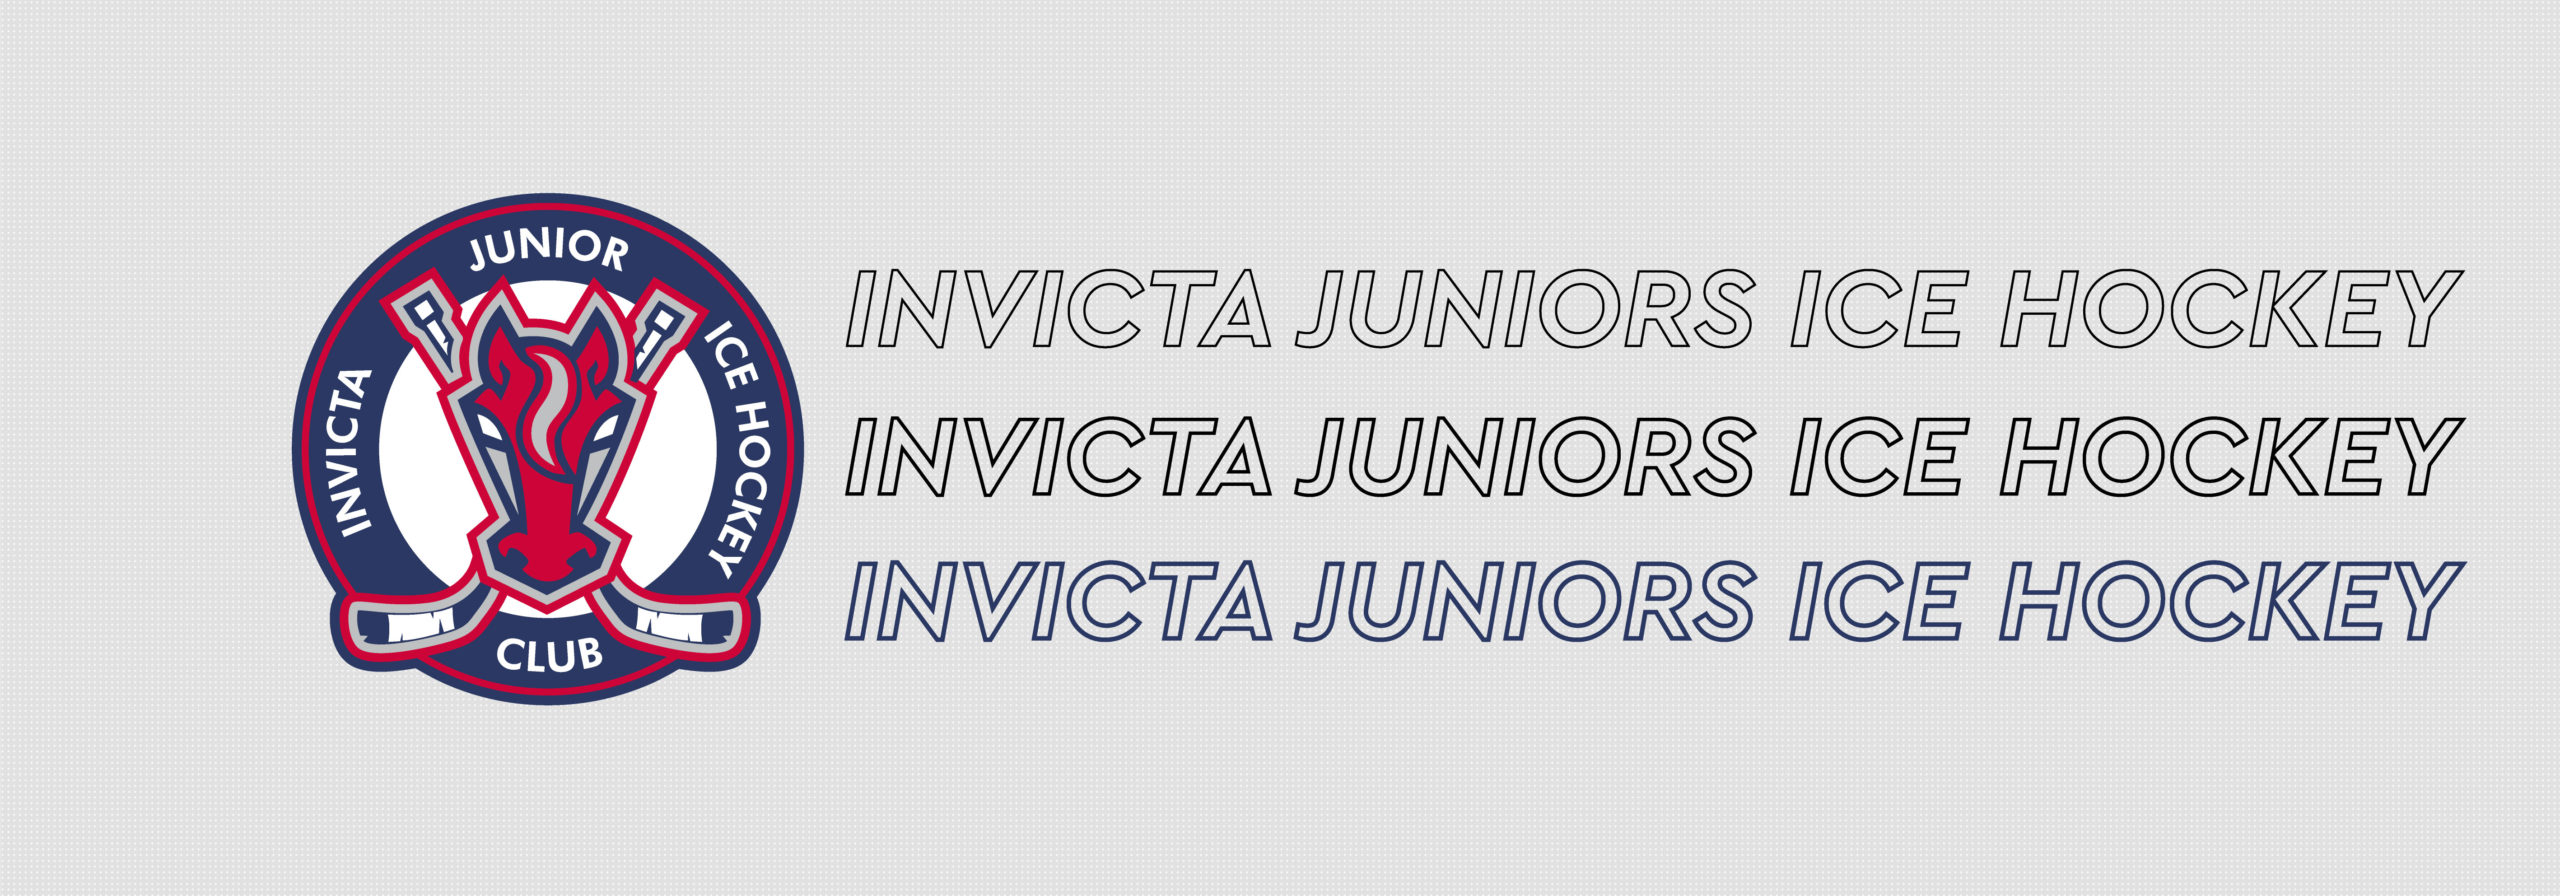 Invicta Juniors Ice Hockey Game Jersey